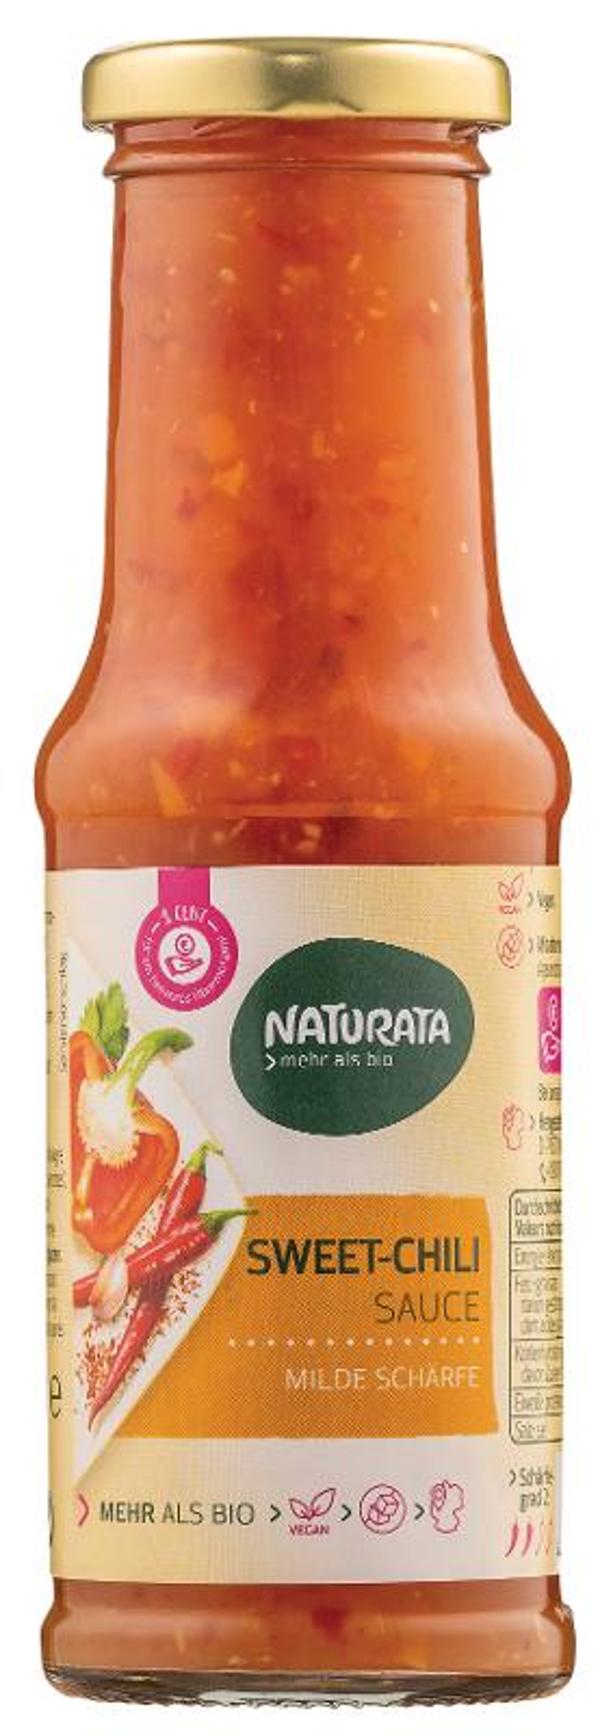 Produktfoto zu Naturata Sweet Chili Sauce 250ml